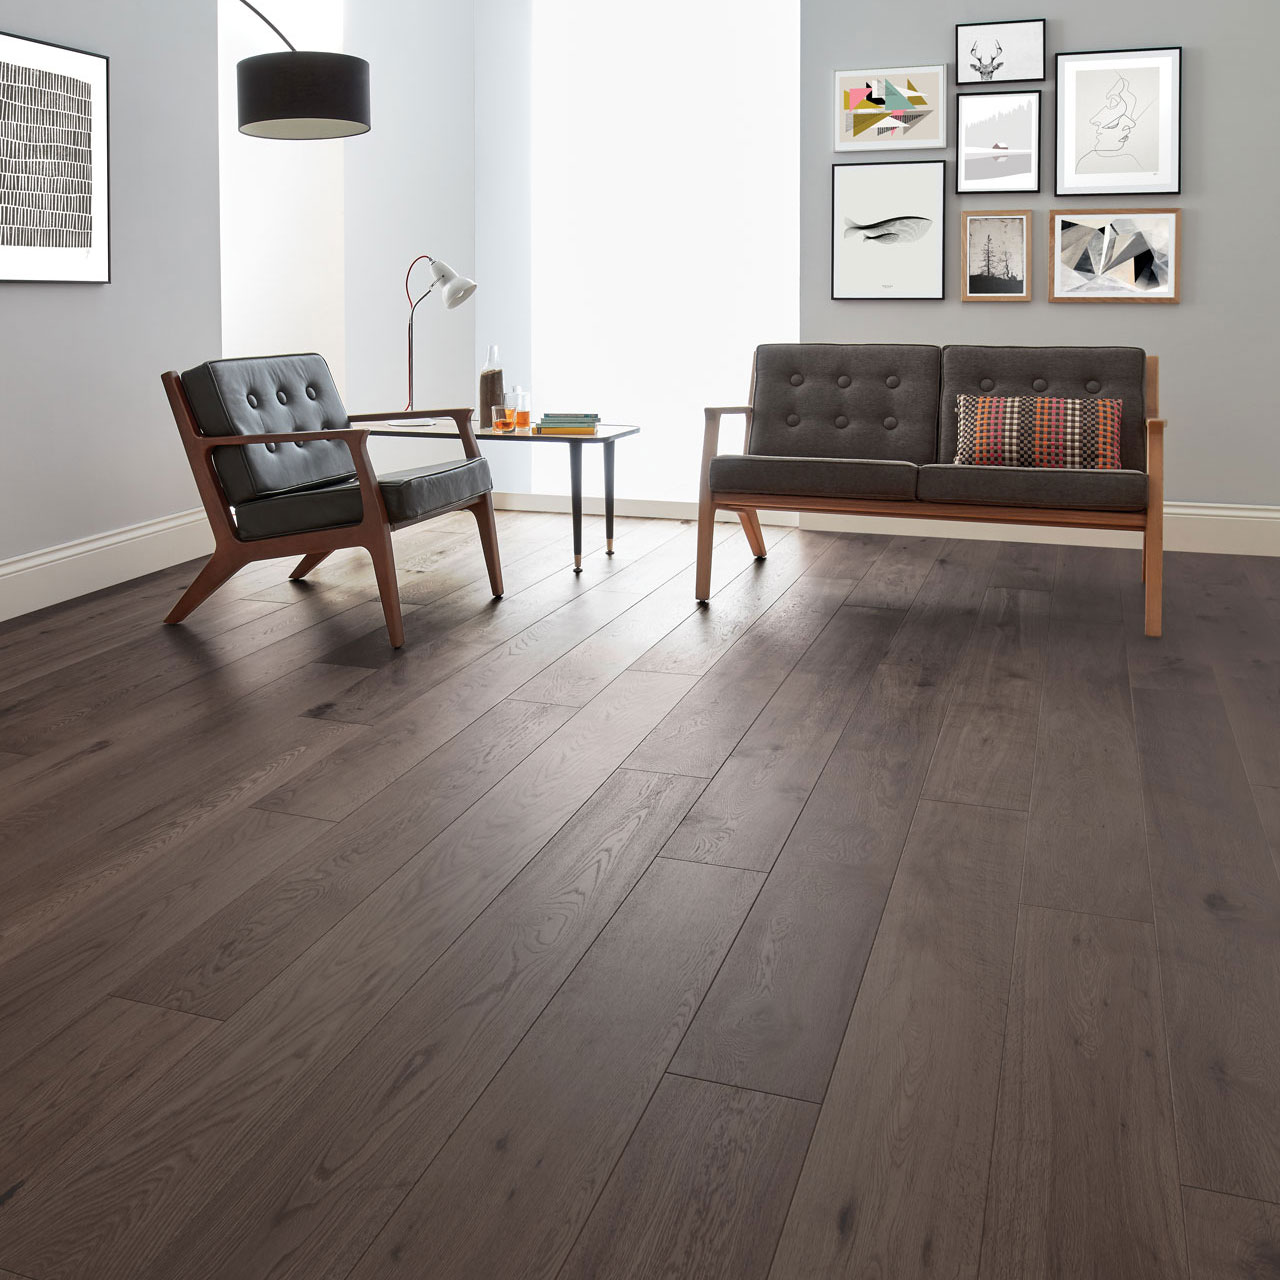 Dark Wood Floors Style Tips, Images Of Dark Hardwood Floors